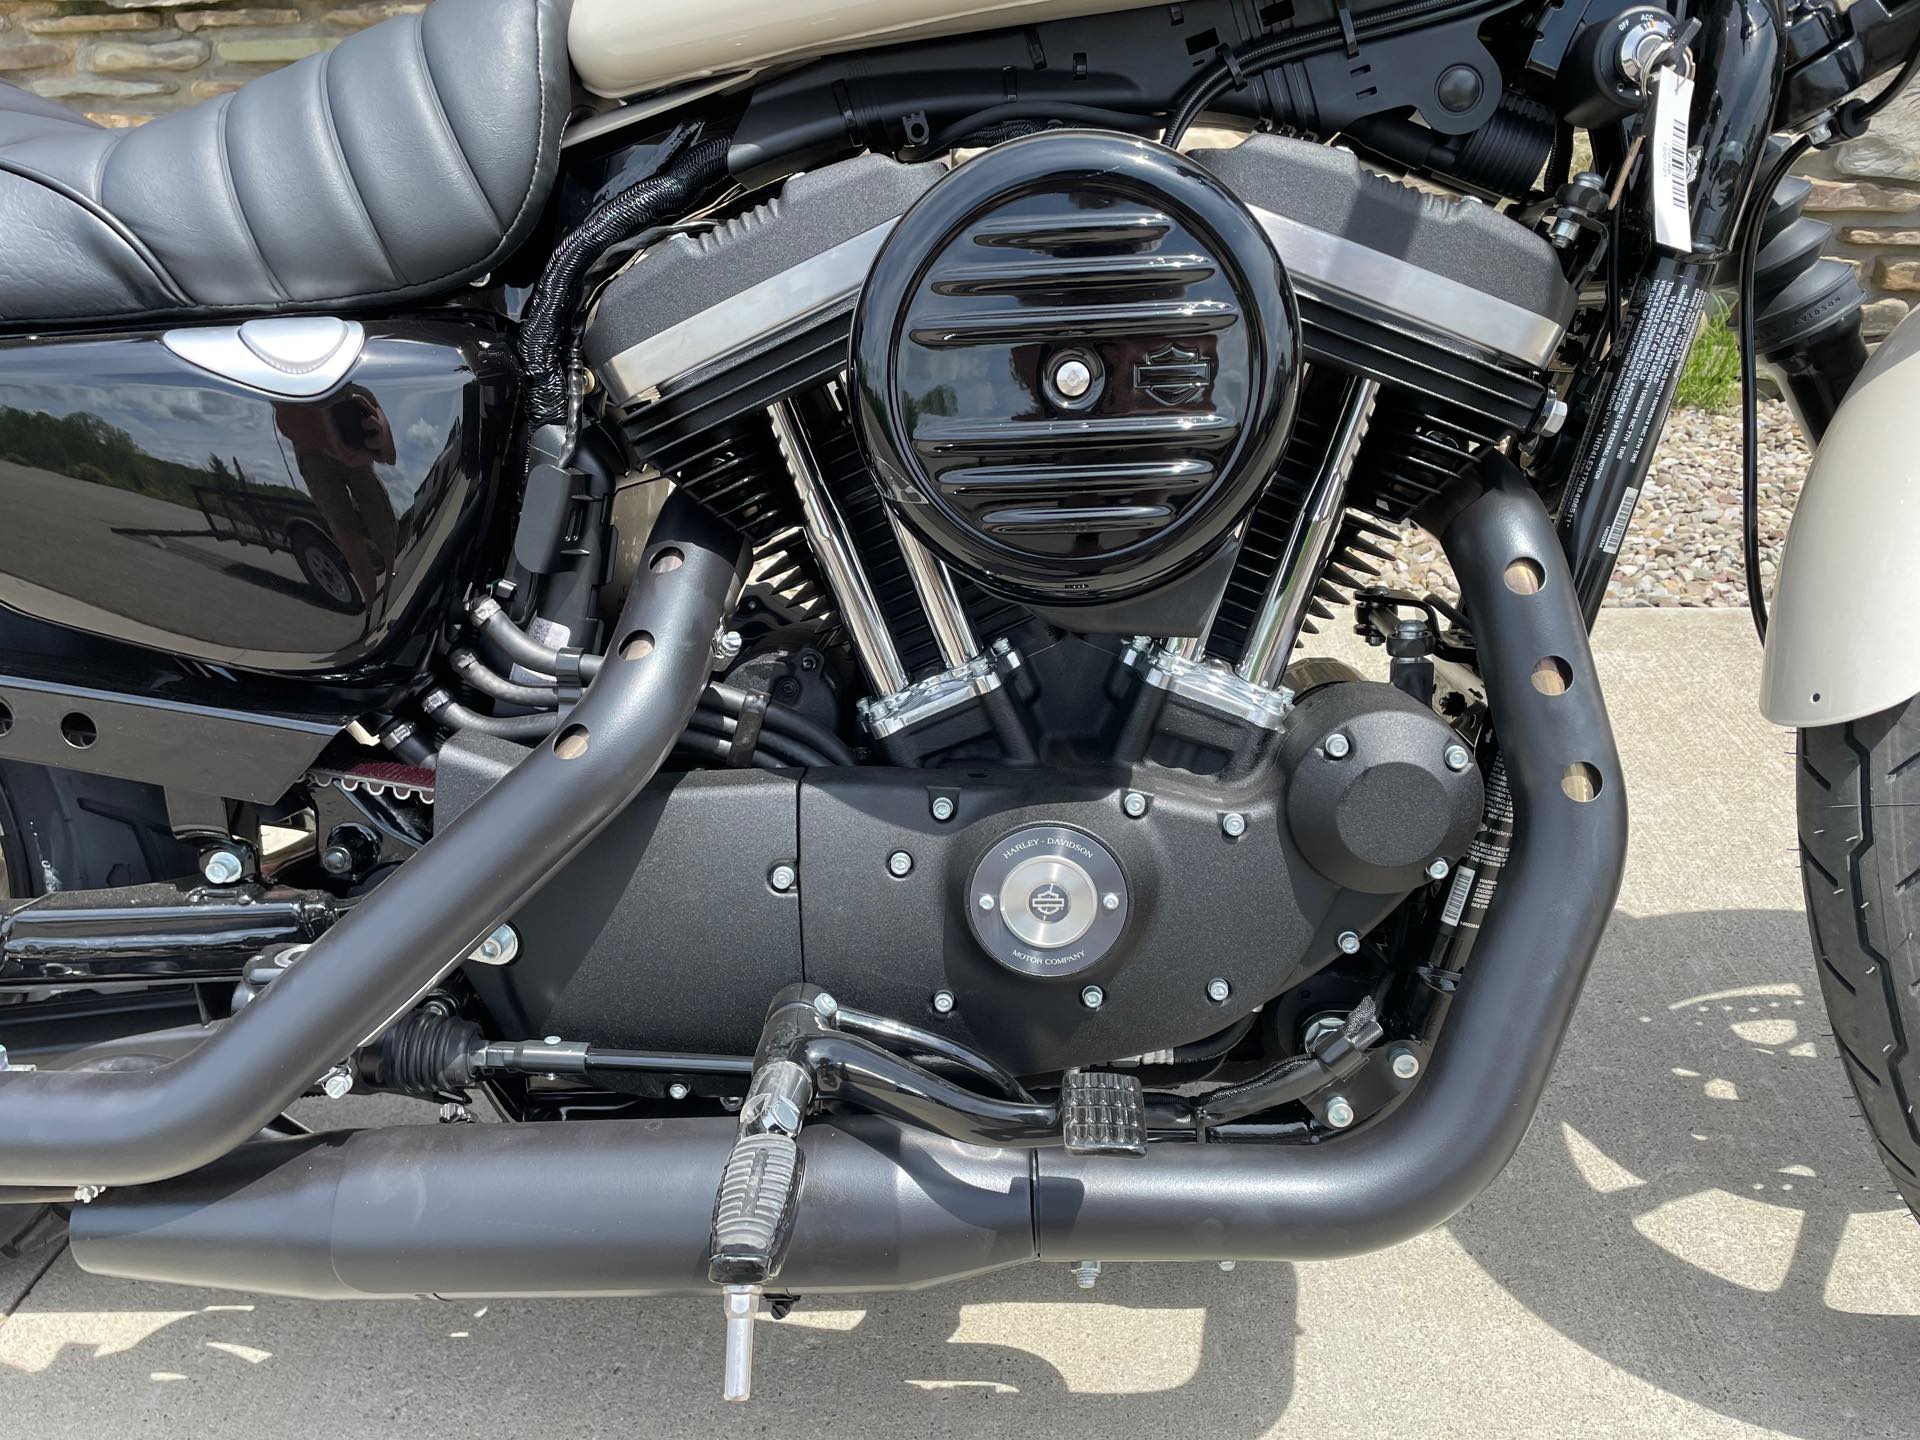 Harley-Davidson Iron 883 Sportster Ride Review - MOTORESS